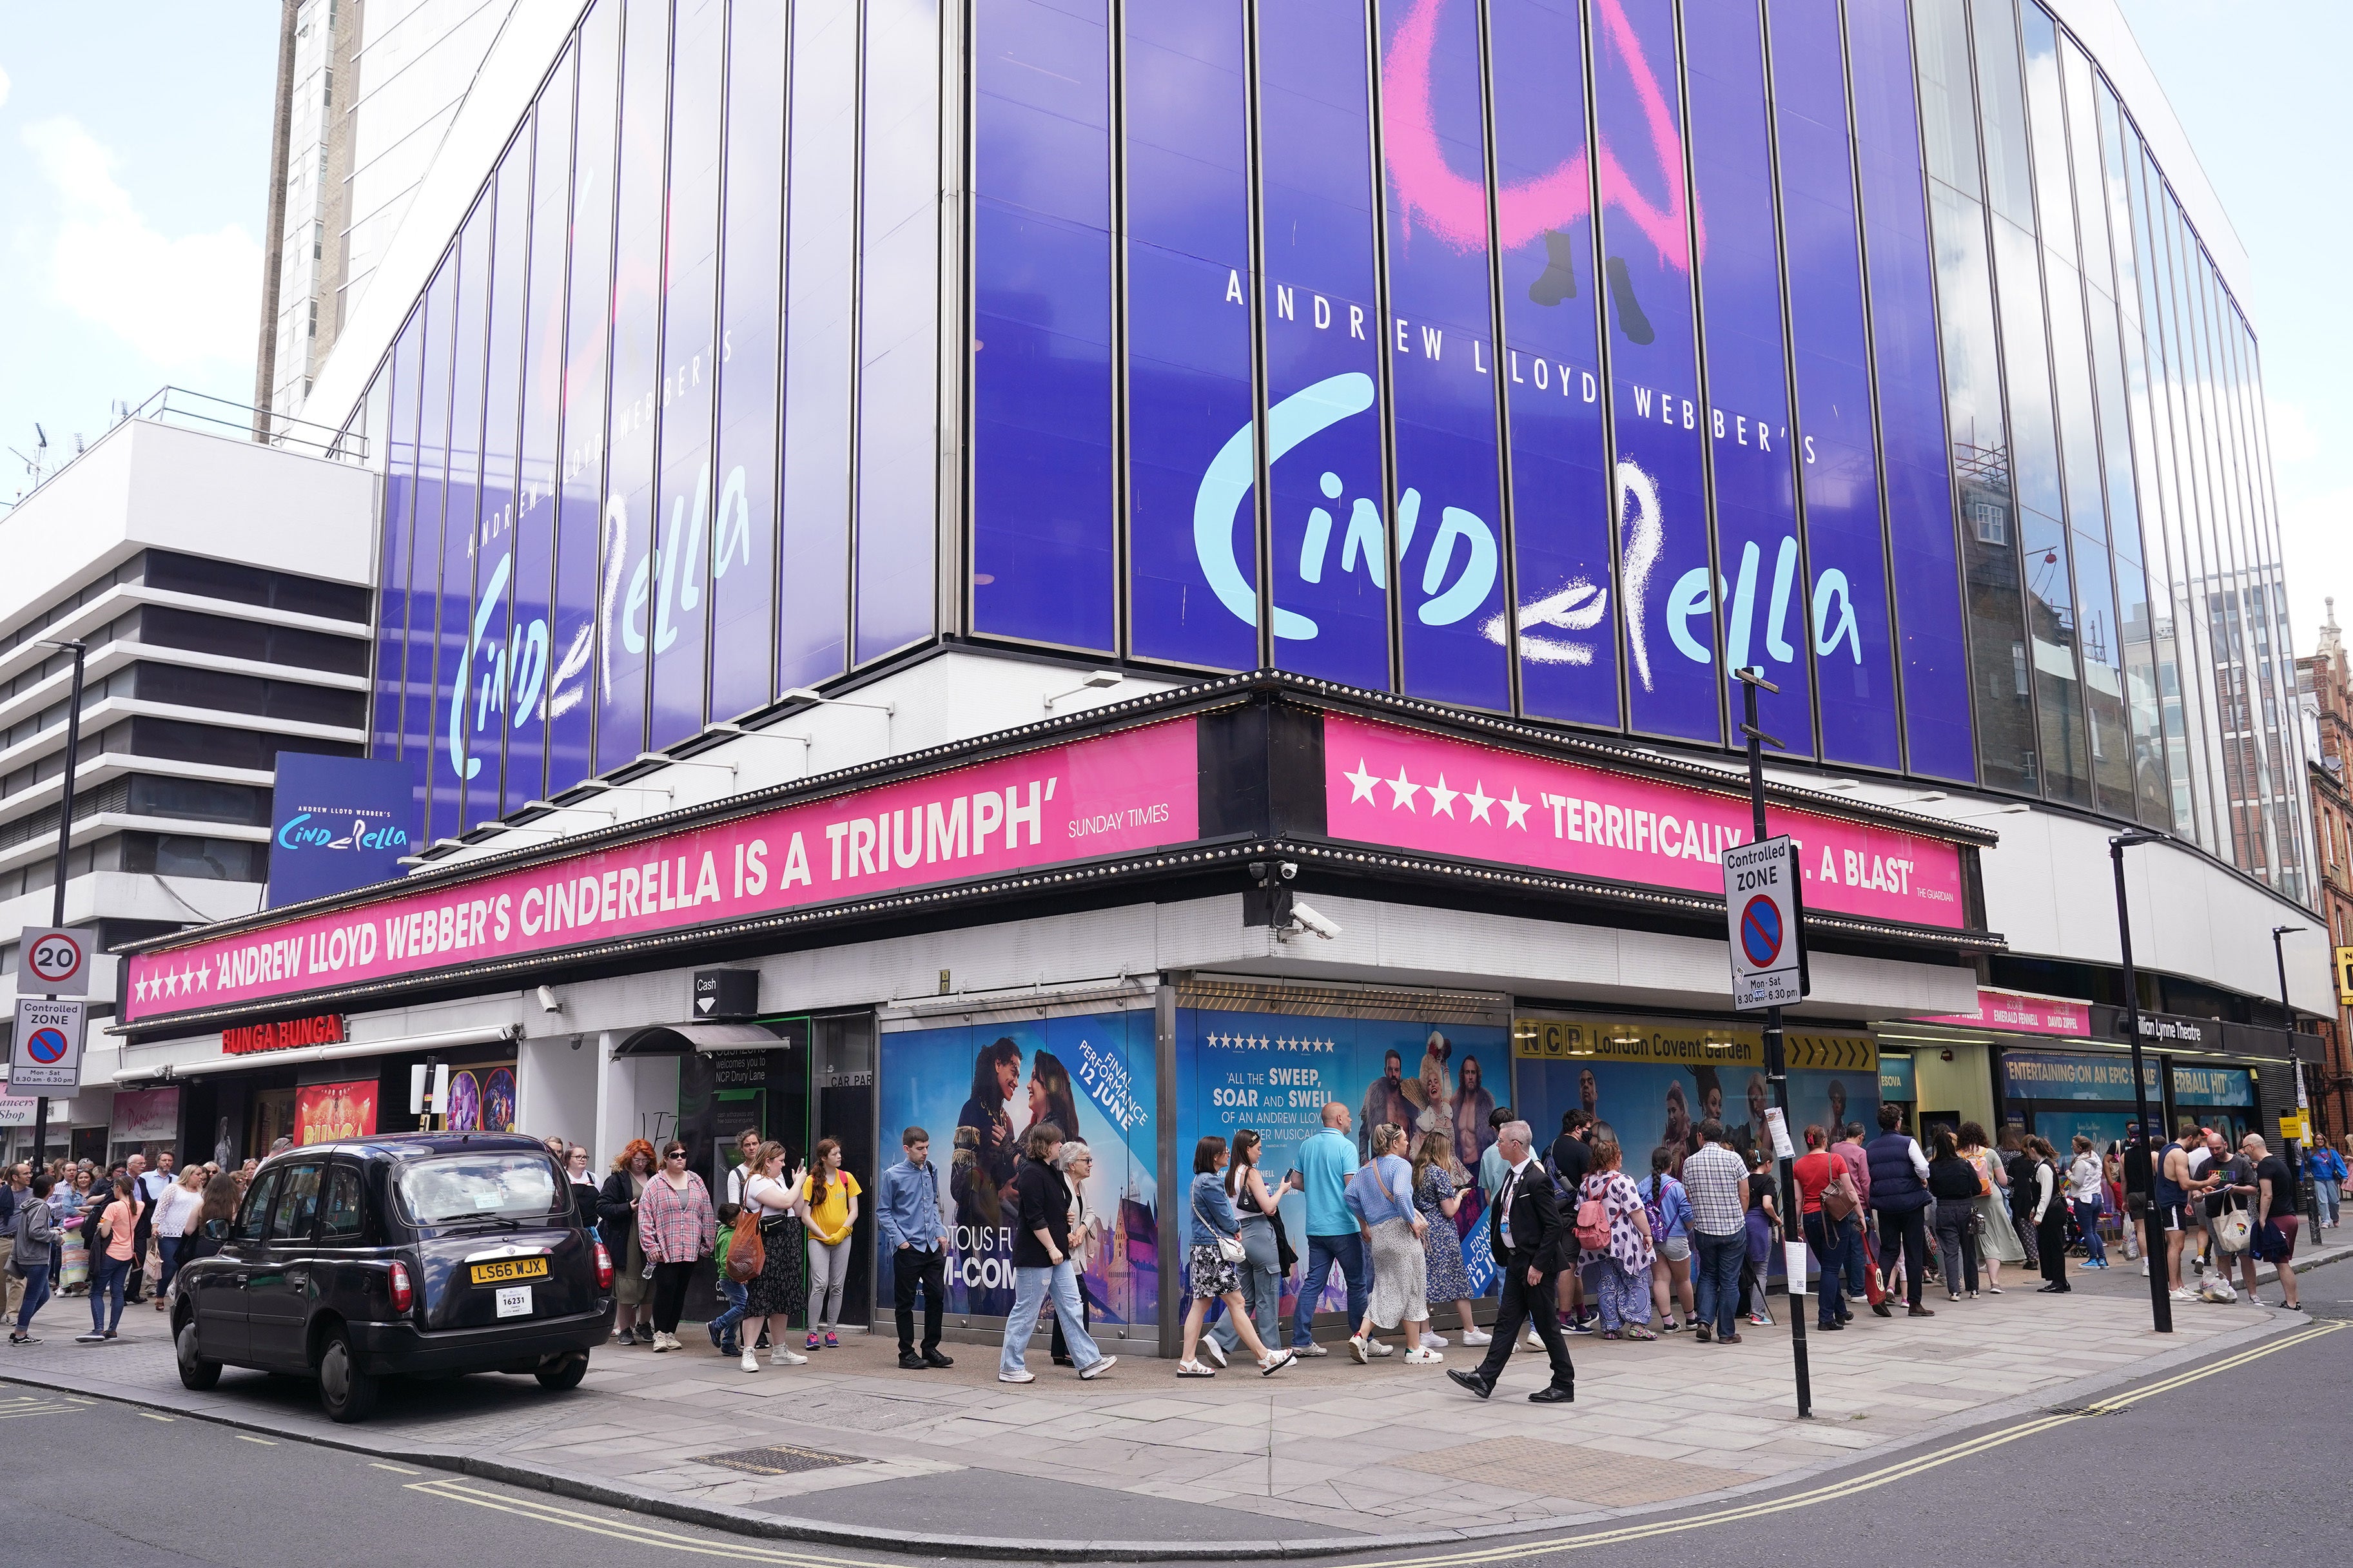 Cinderella ran at the Gillian Lynne Theatre in London until June